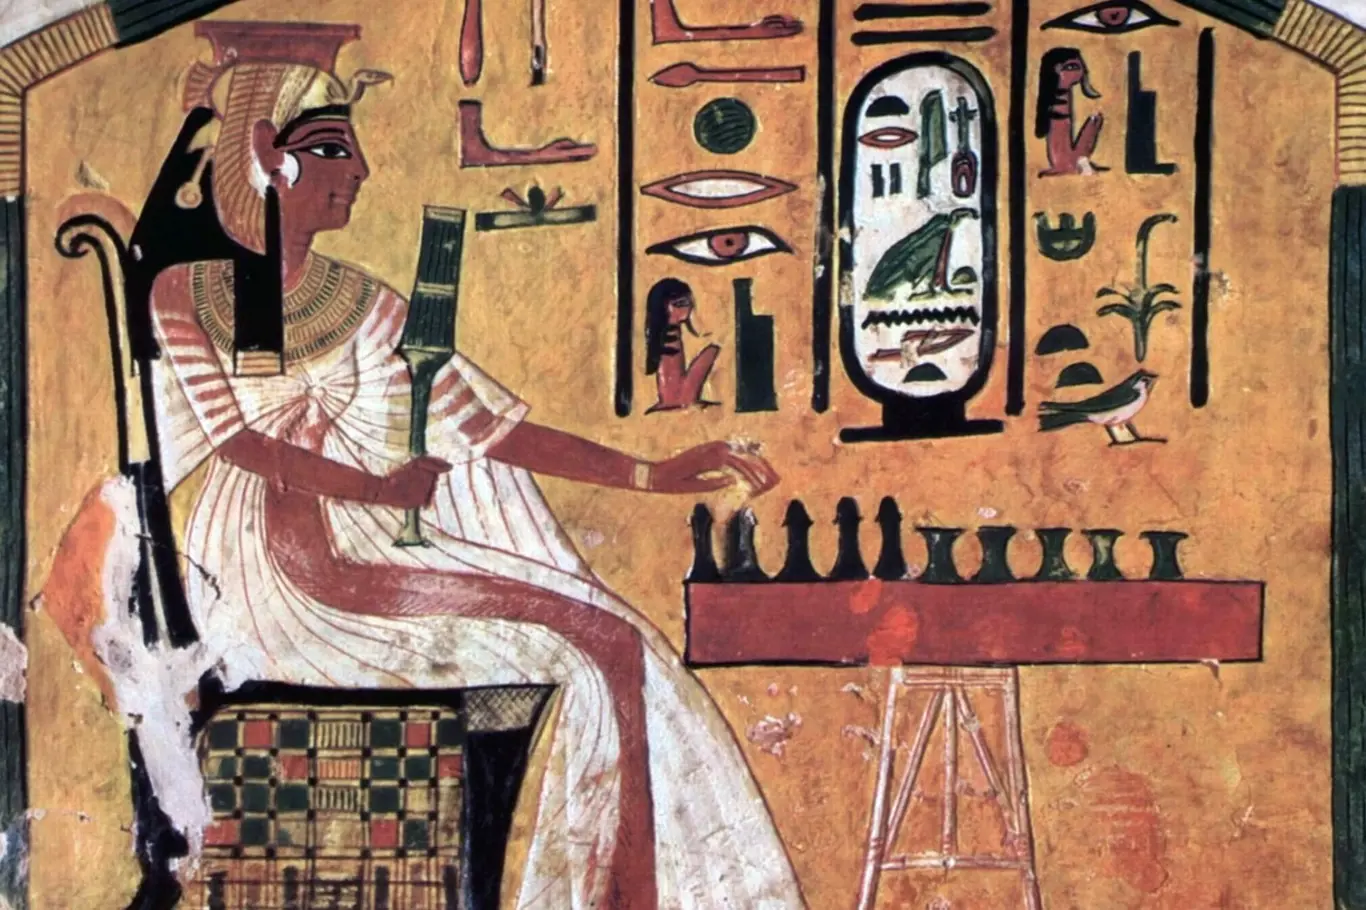 Královna Nefertari